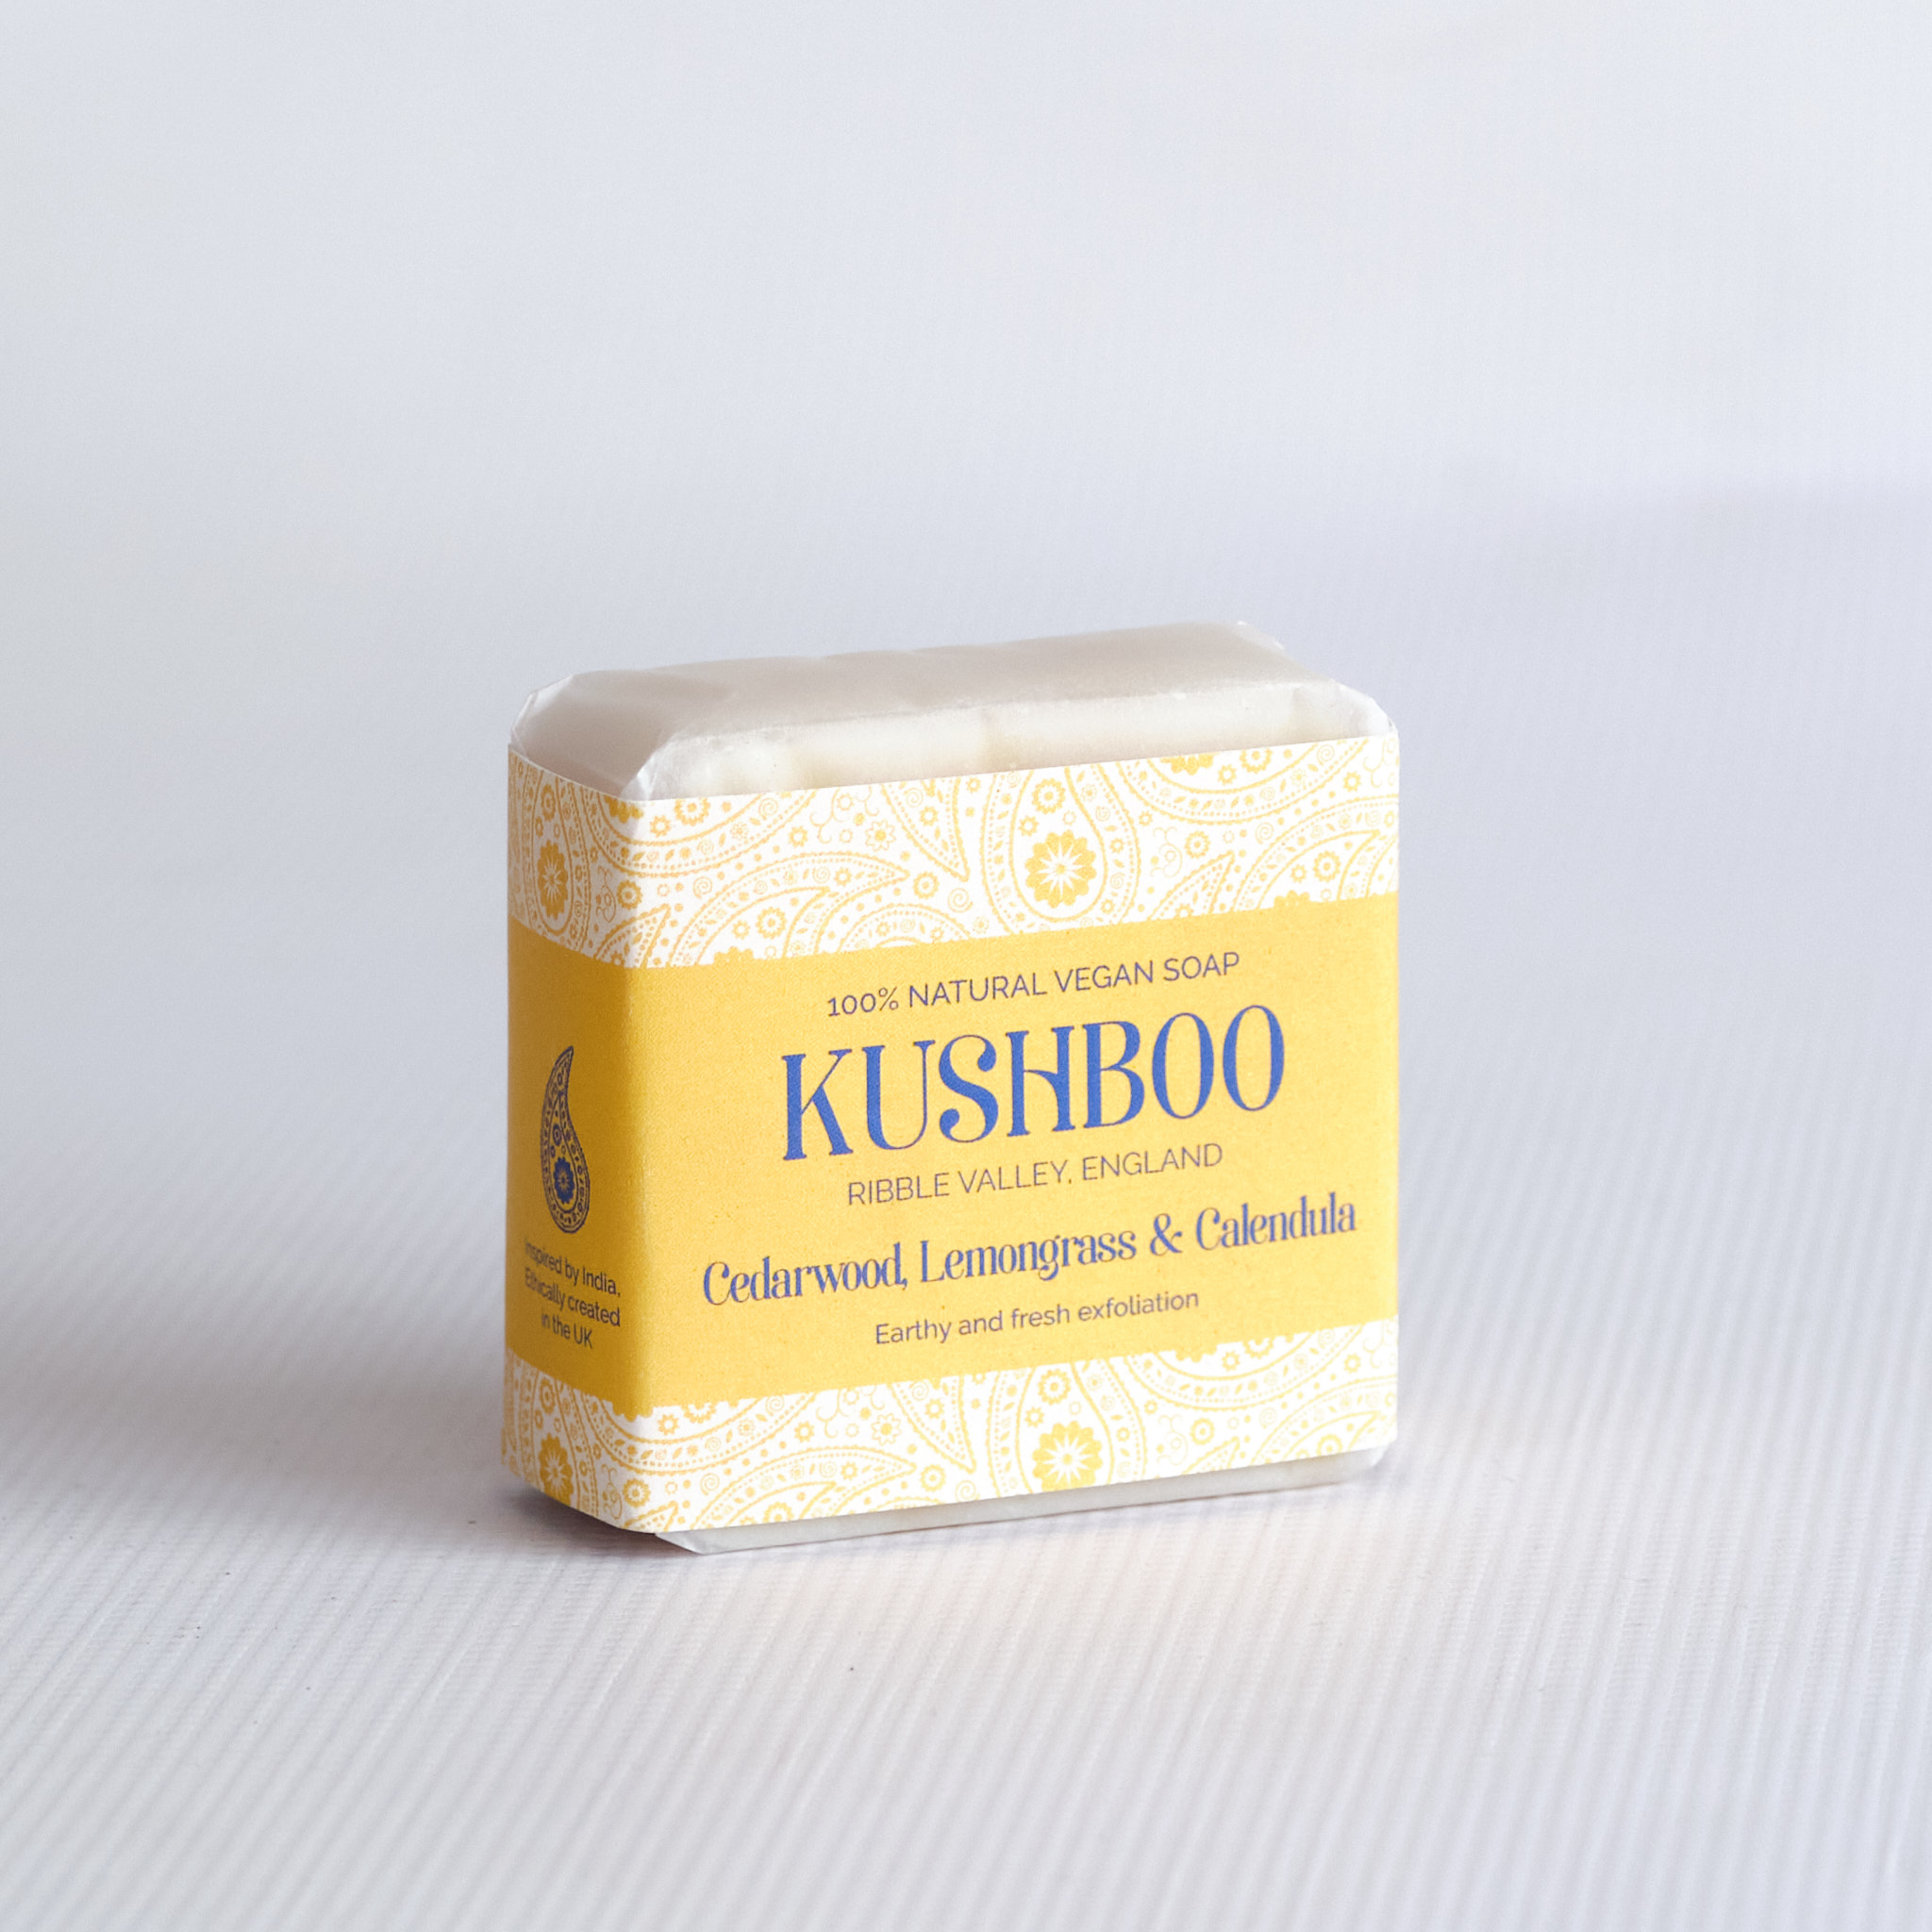 Kushboo Cedarwood, Lemongrass & Calendula Soap 